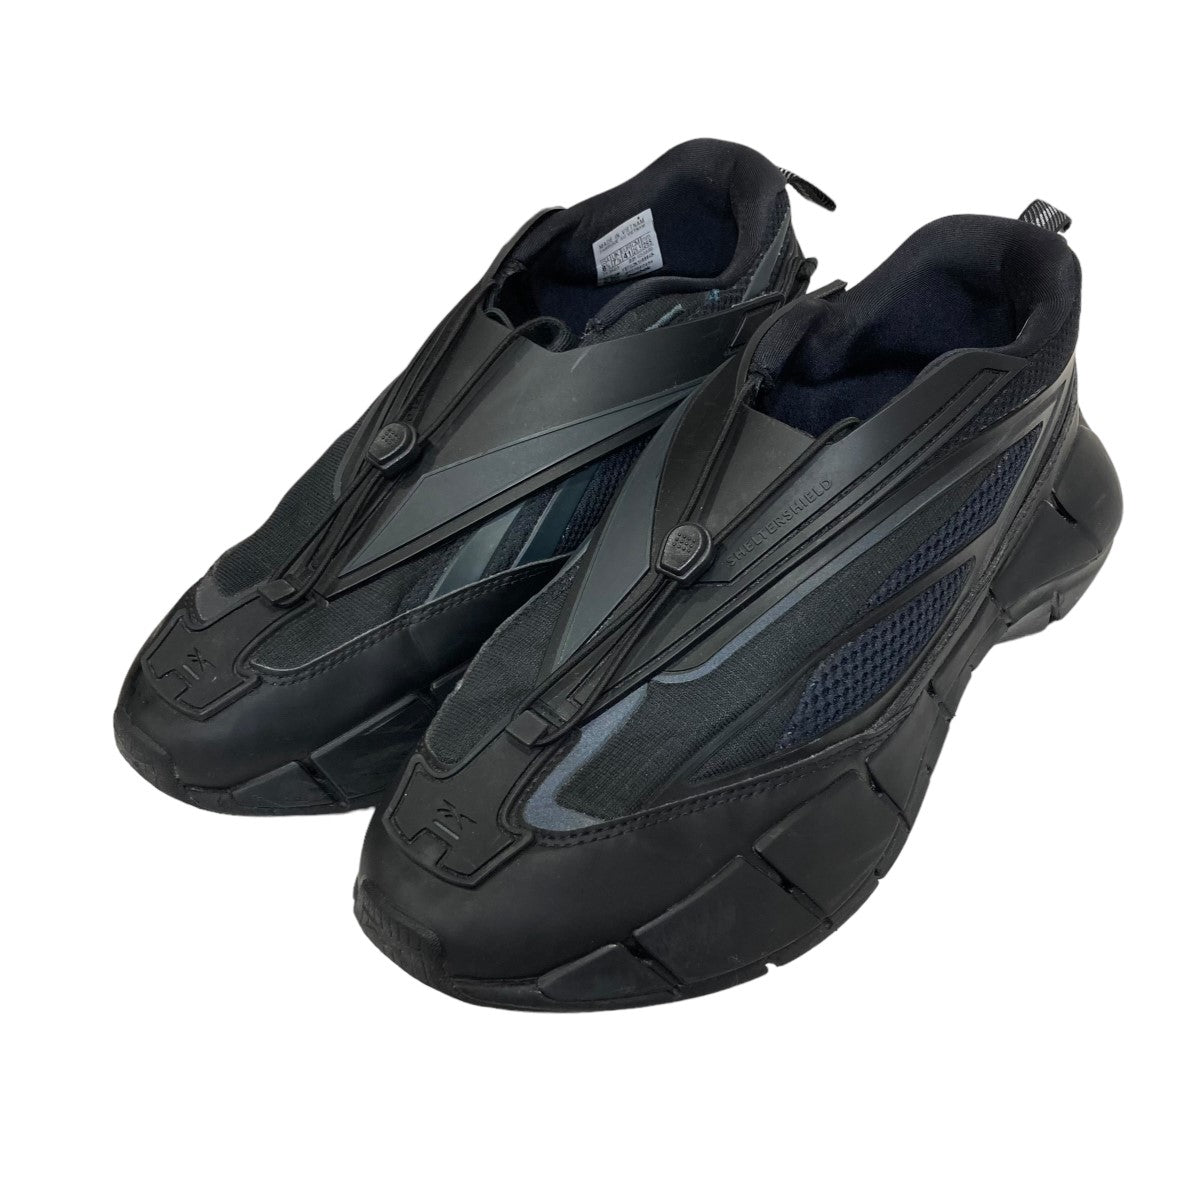 Reebok(リーボック) 「Zig 3D Storm Hydro Shoes」スニーカー G55680 ...